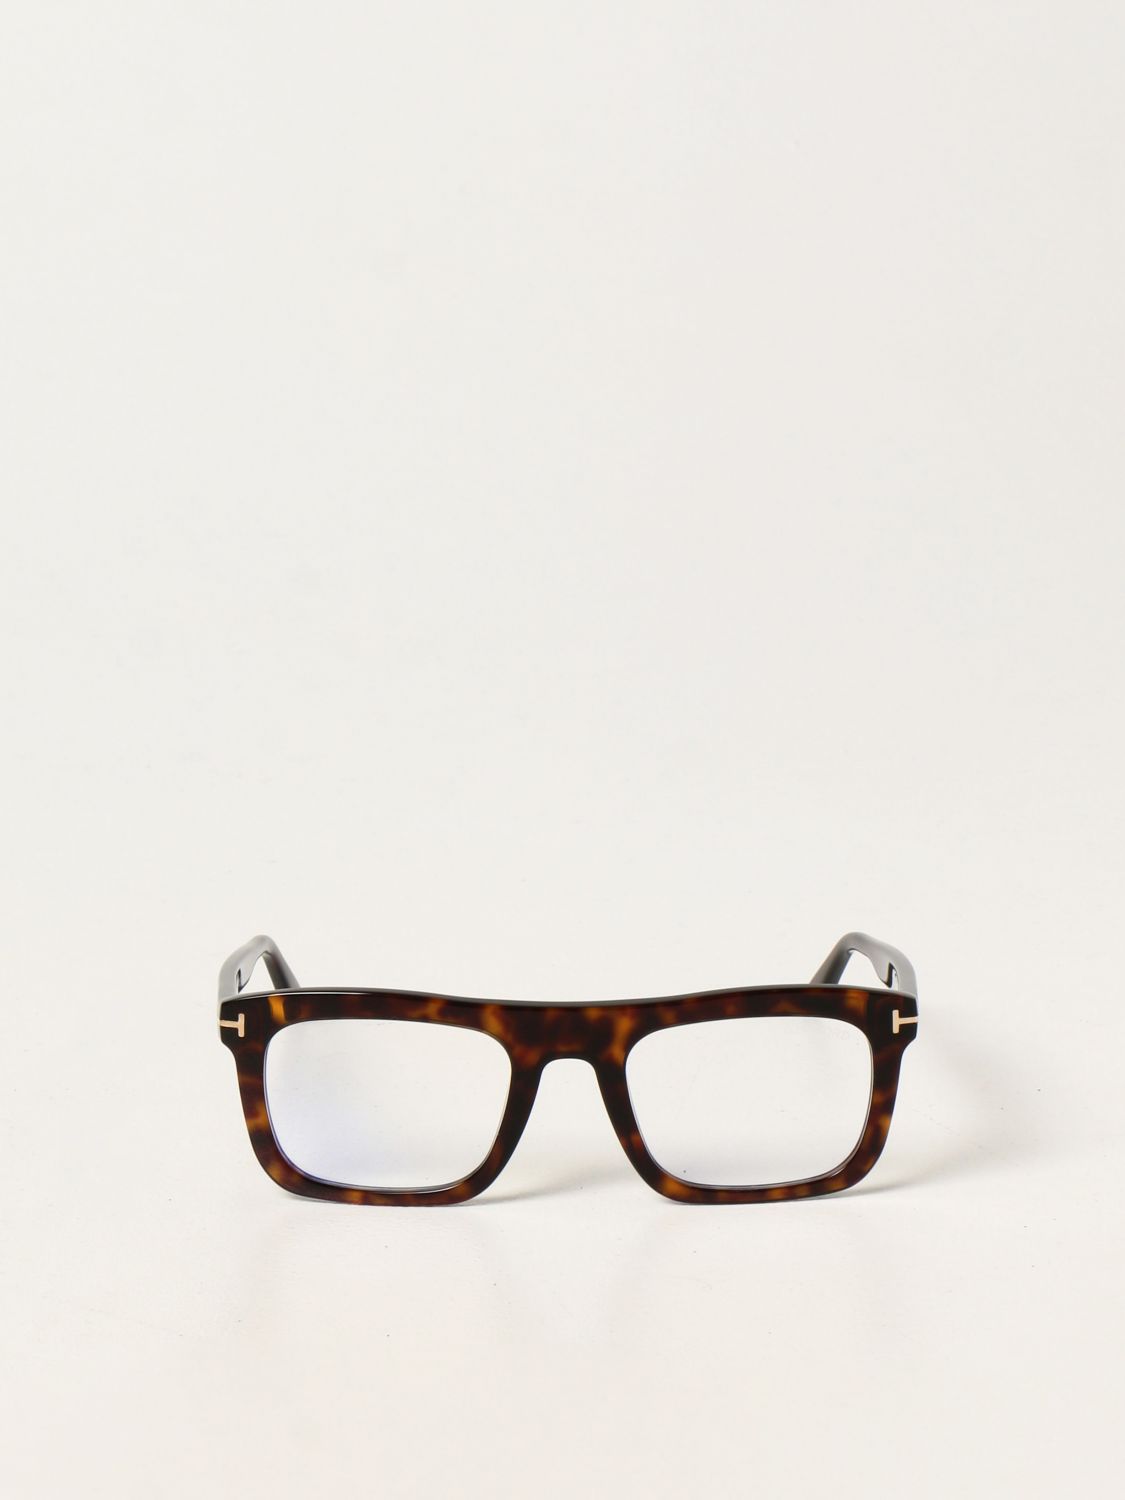 Gafas Tom Ford: Gafas hombre Tom Ford marrón 2